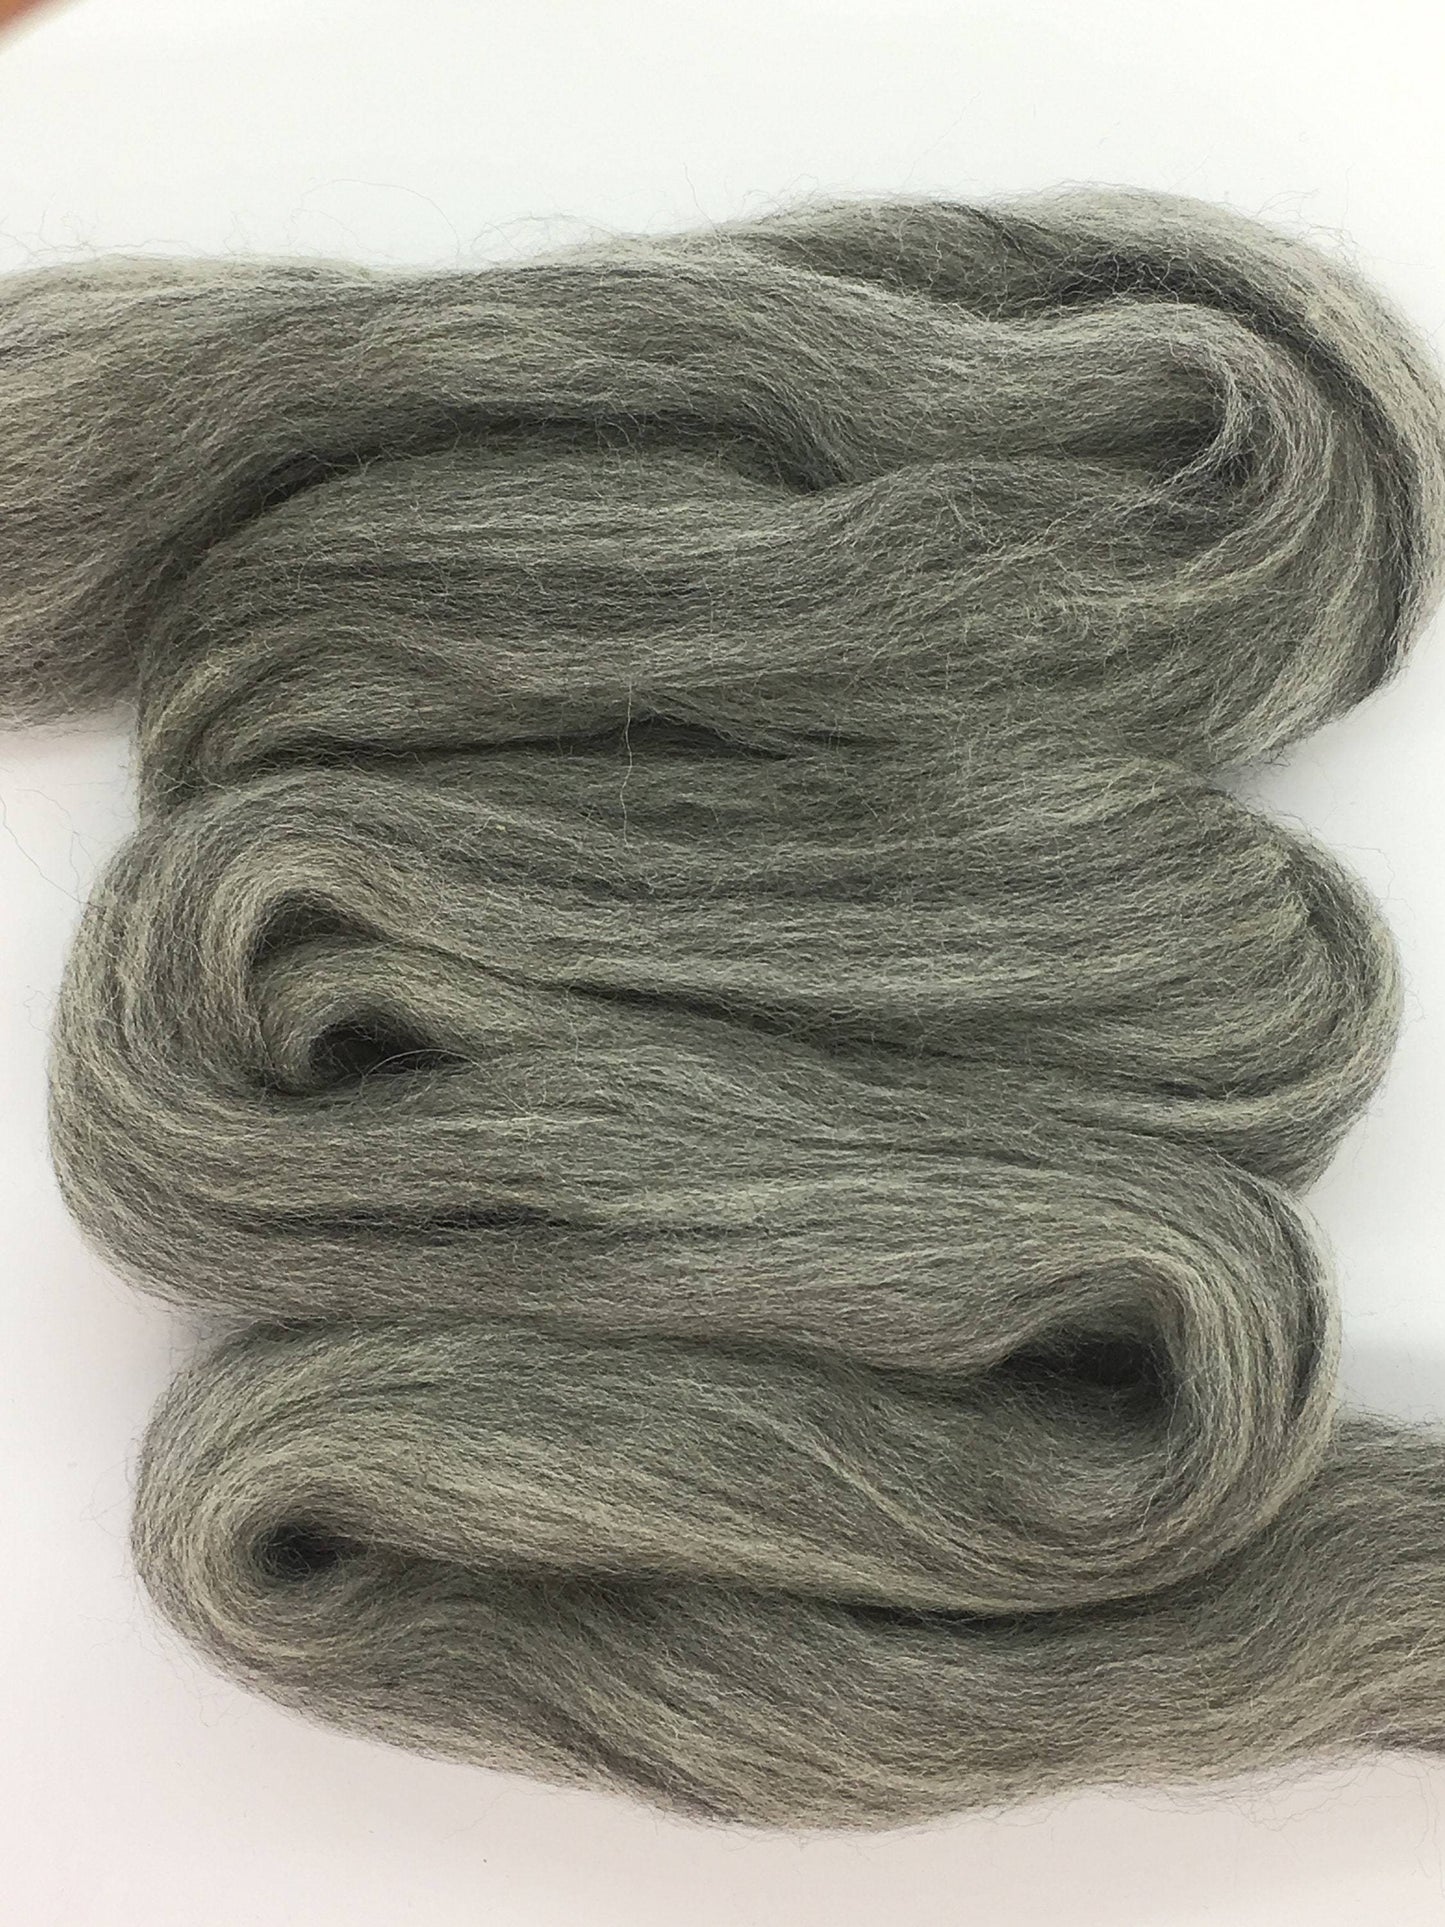 Merino Wool Top Roving Fiber Gray Blend